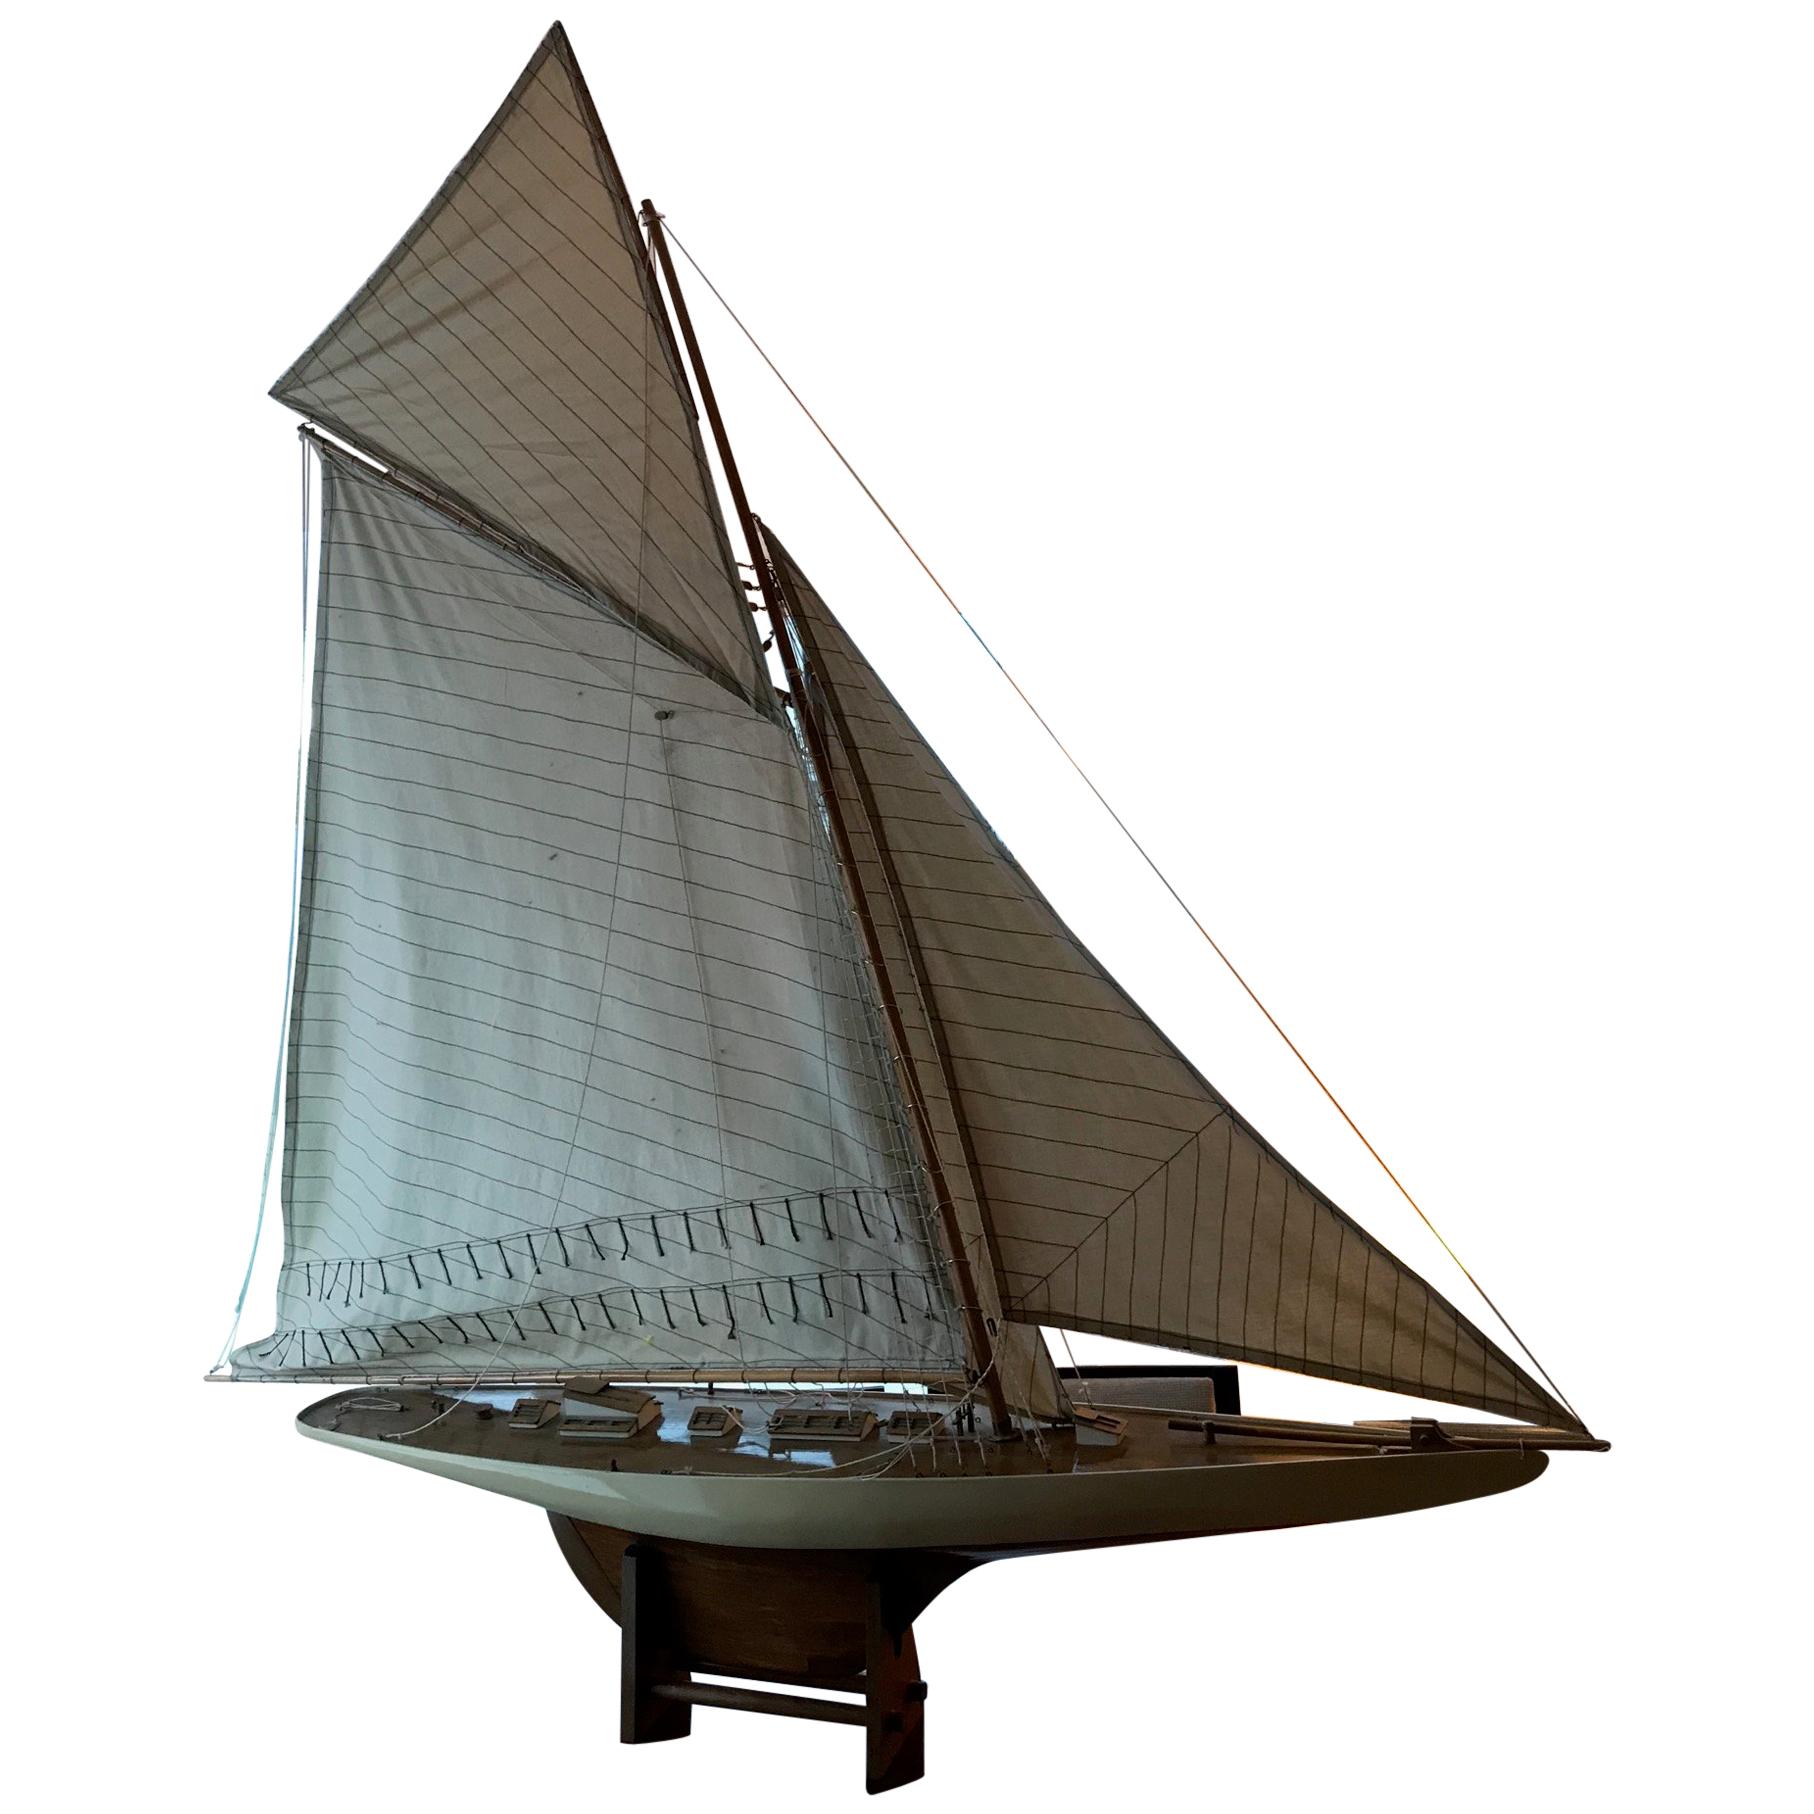 Model Sailboat of Impressive Stature and Workmanship For Sale